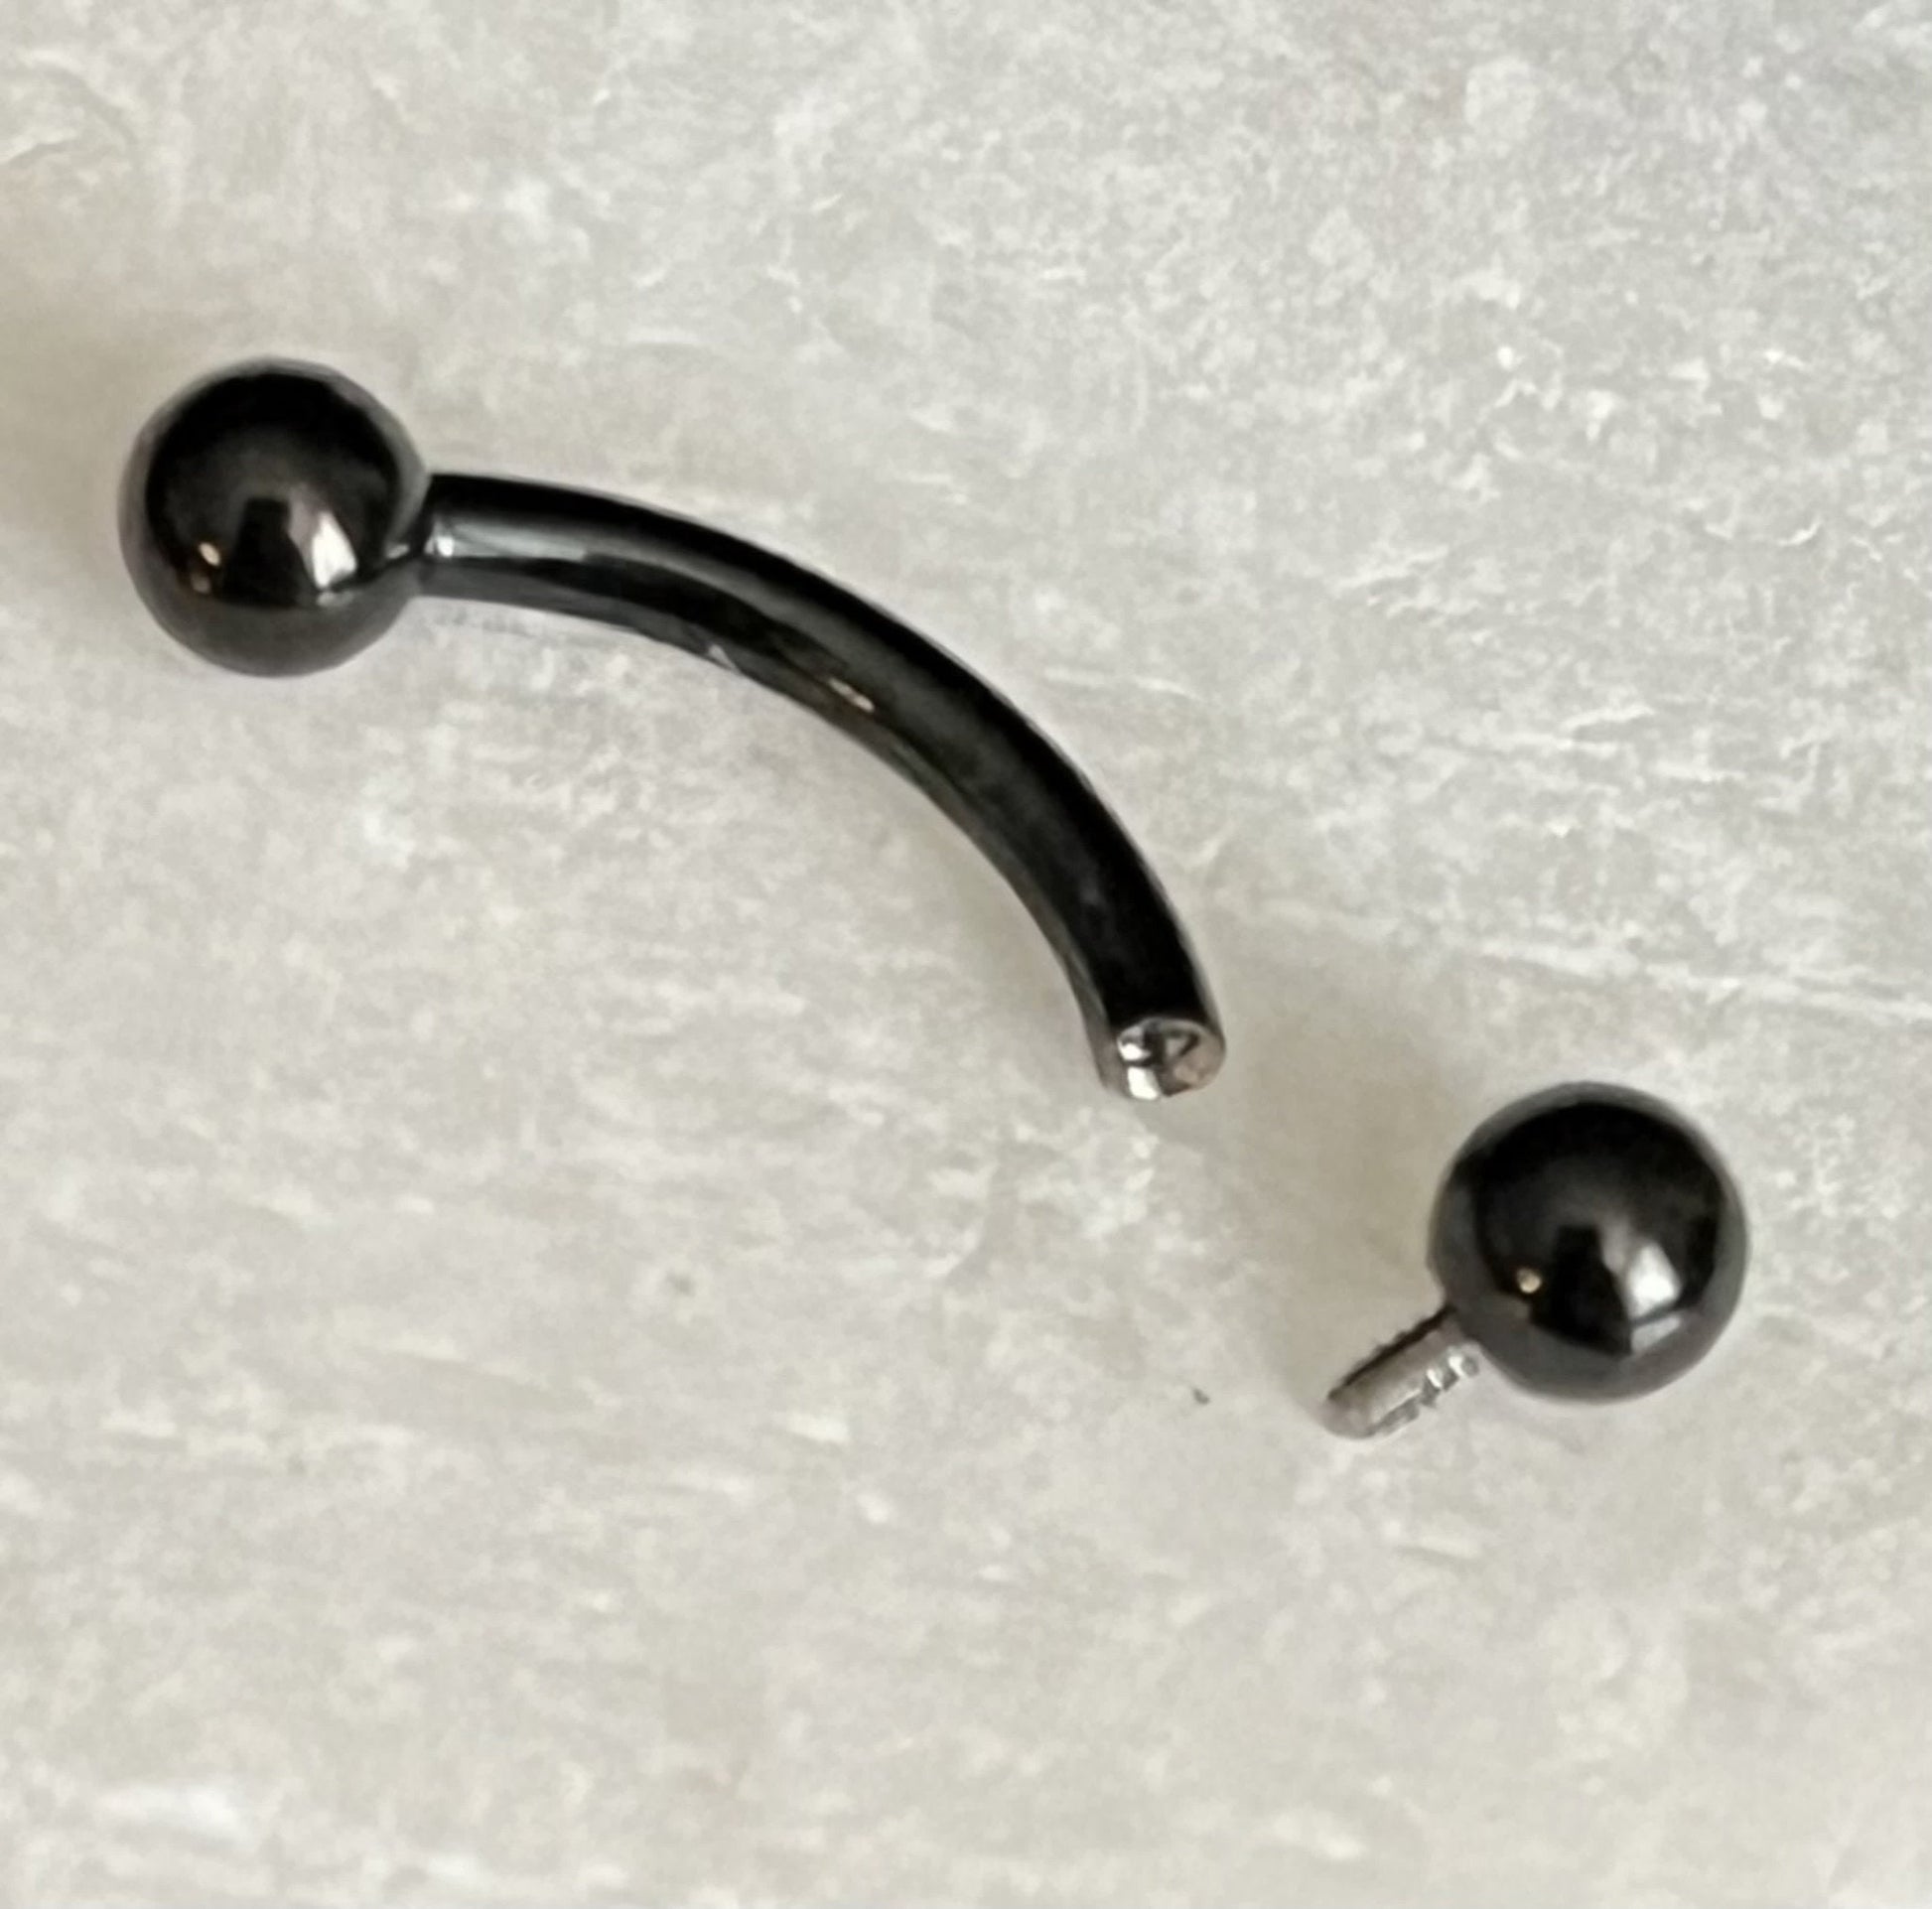 1 Piece Stunning Implant Grade Titanium Internally Threaded Curved Barbell / Eyebrow Ring - 16g